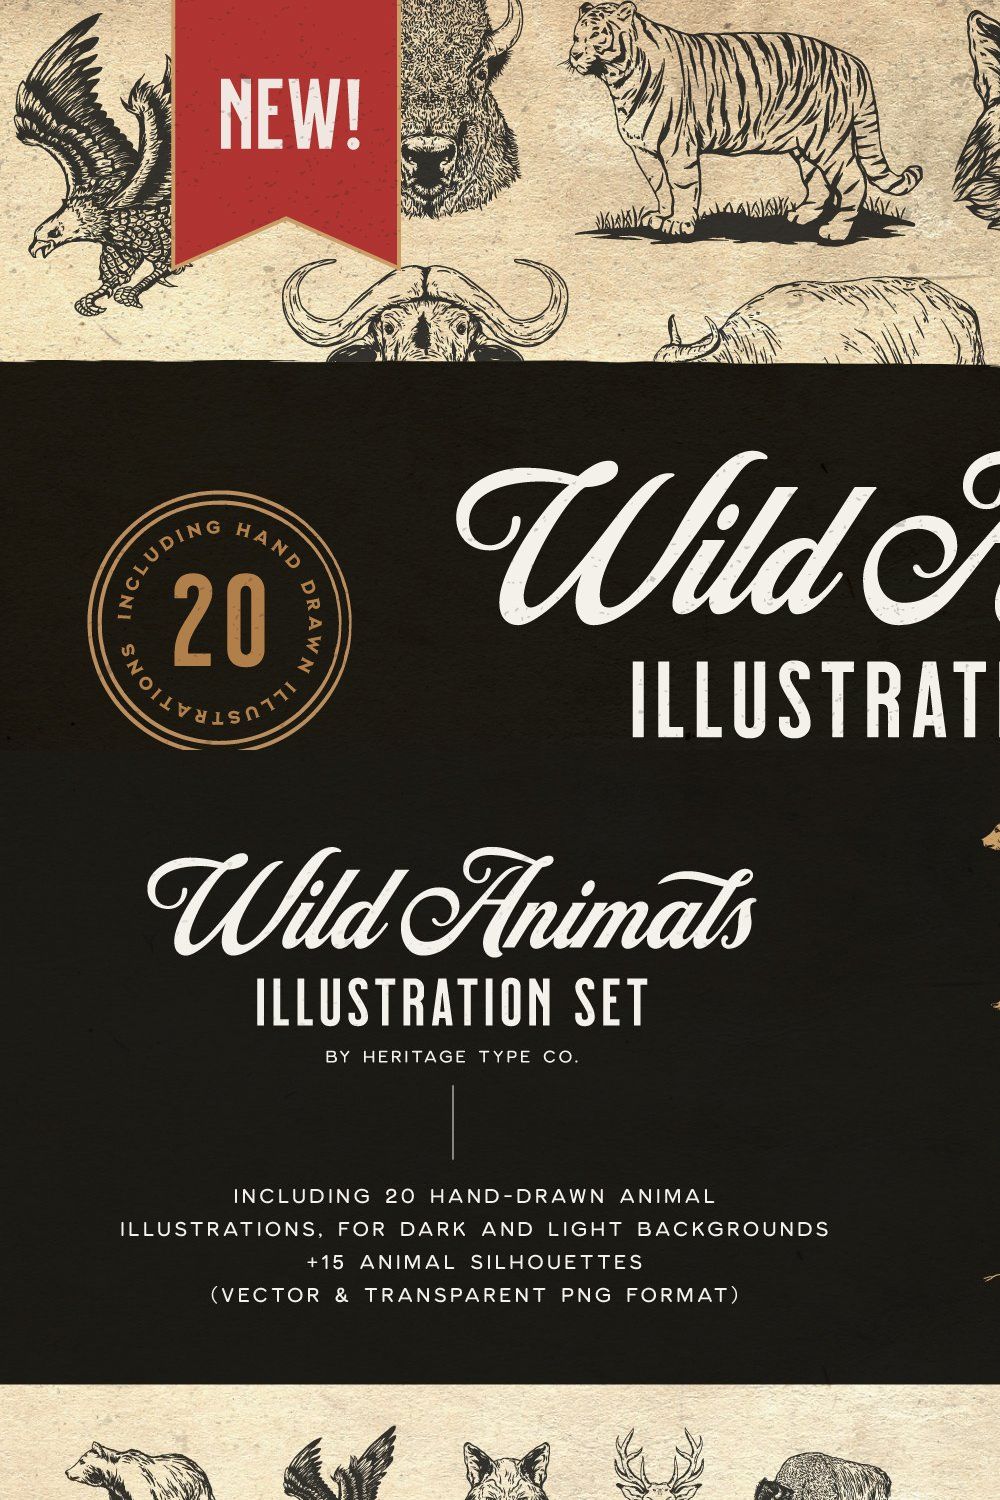 Wild Animals - Illustration Set pinterest preview image.